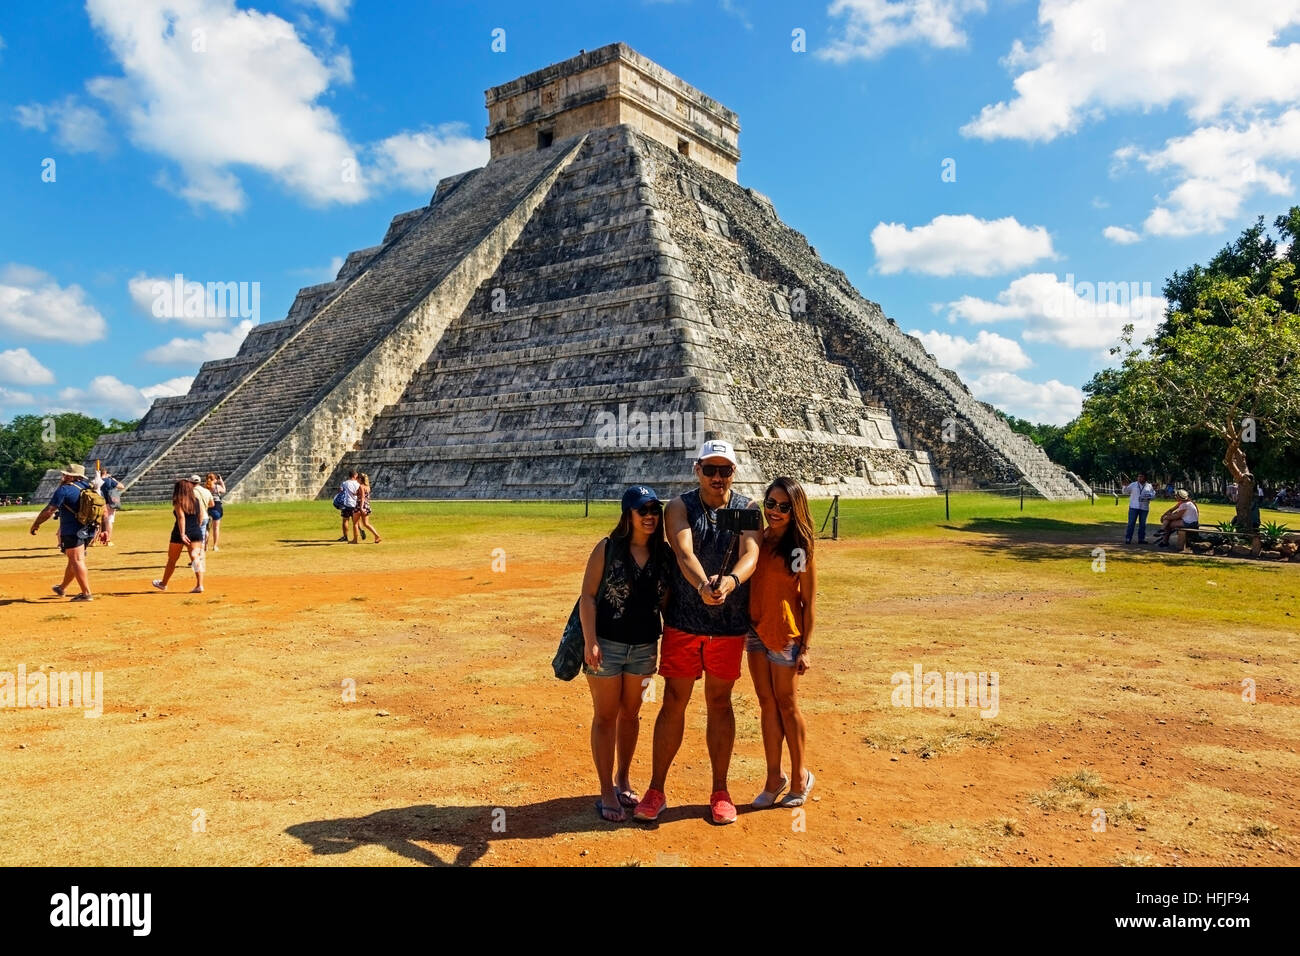 Central structure of Castillo, in the ancient Mayan temple of Chichen Itza, Yucatan, mexico Stock Photo